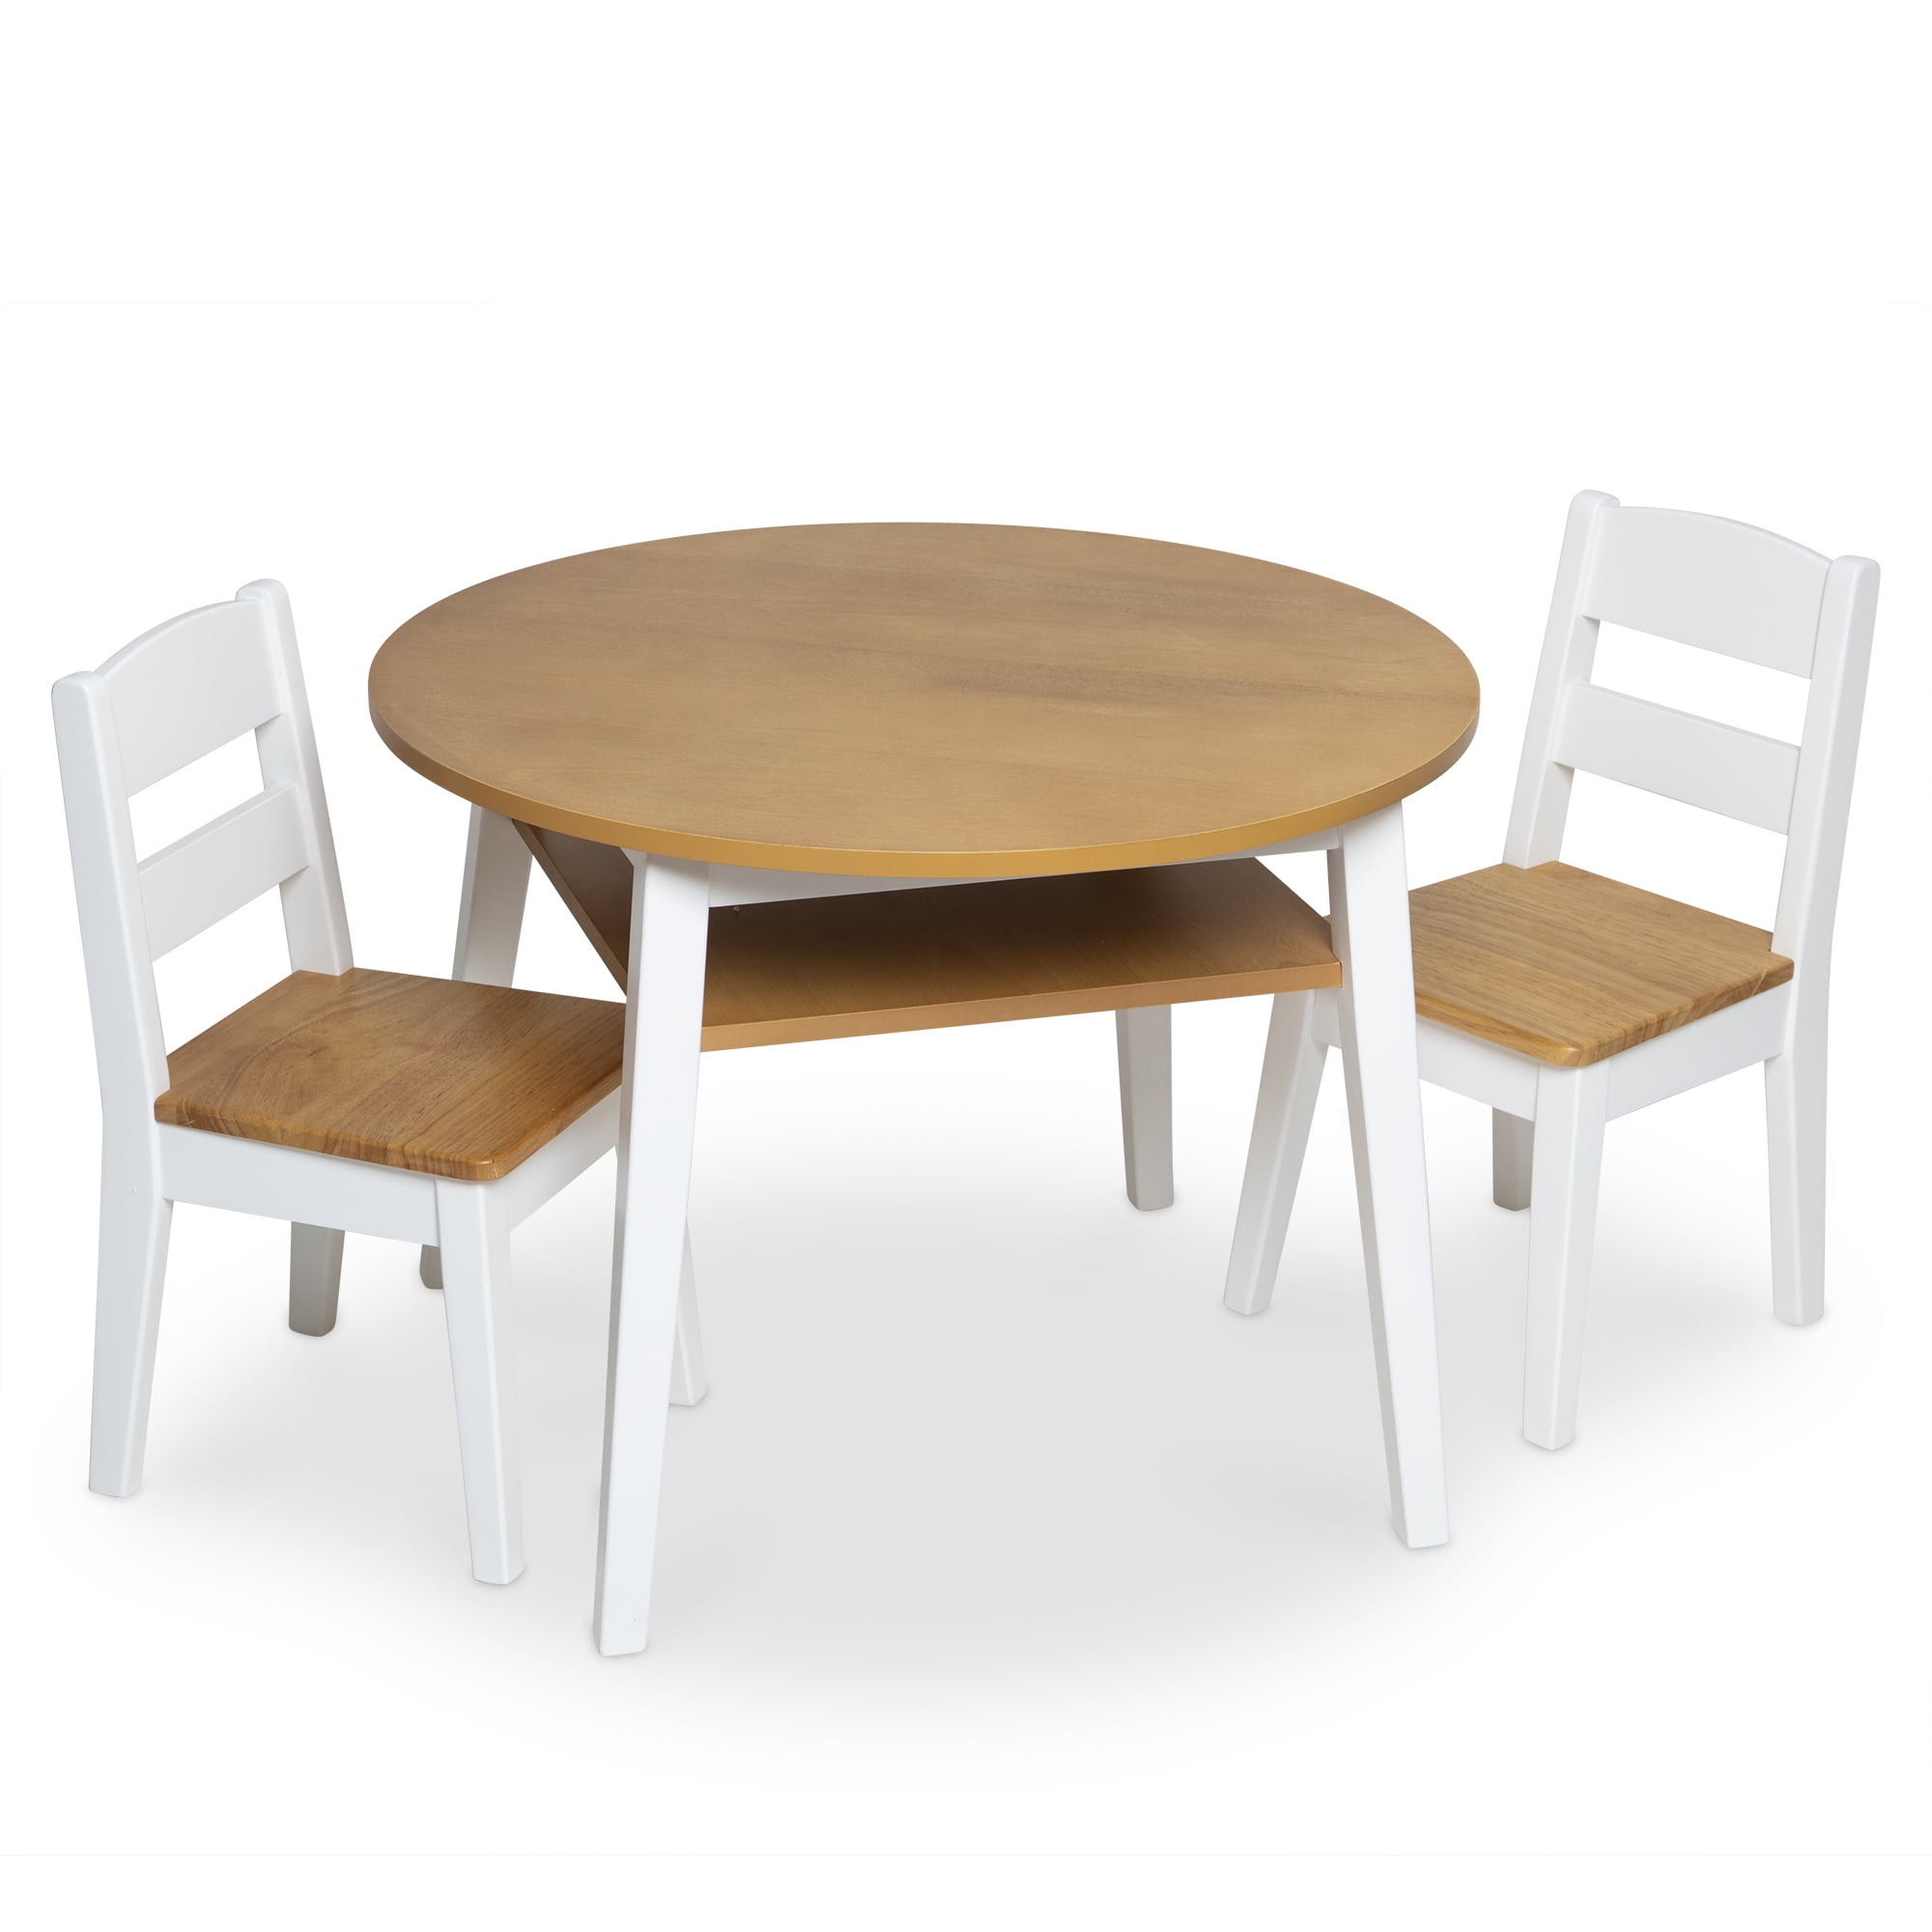 KIDKRAFT 3 PIECE ROUND TABLE AND 2 CHAIR SET CENTER MESH STORAGE NATURAL & WHITE 